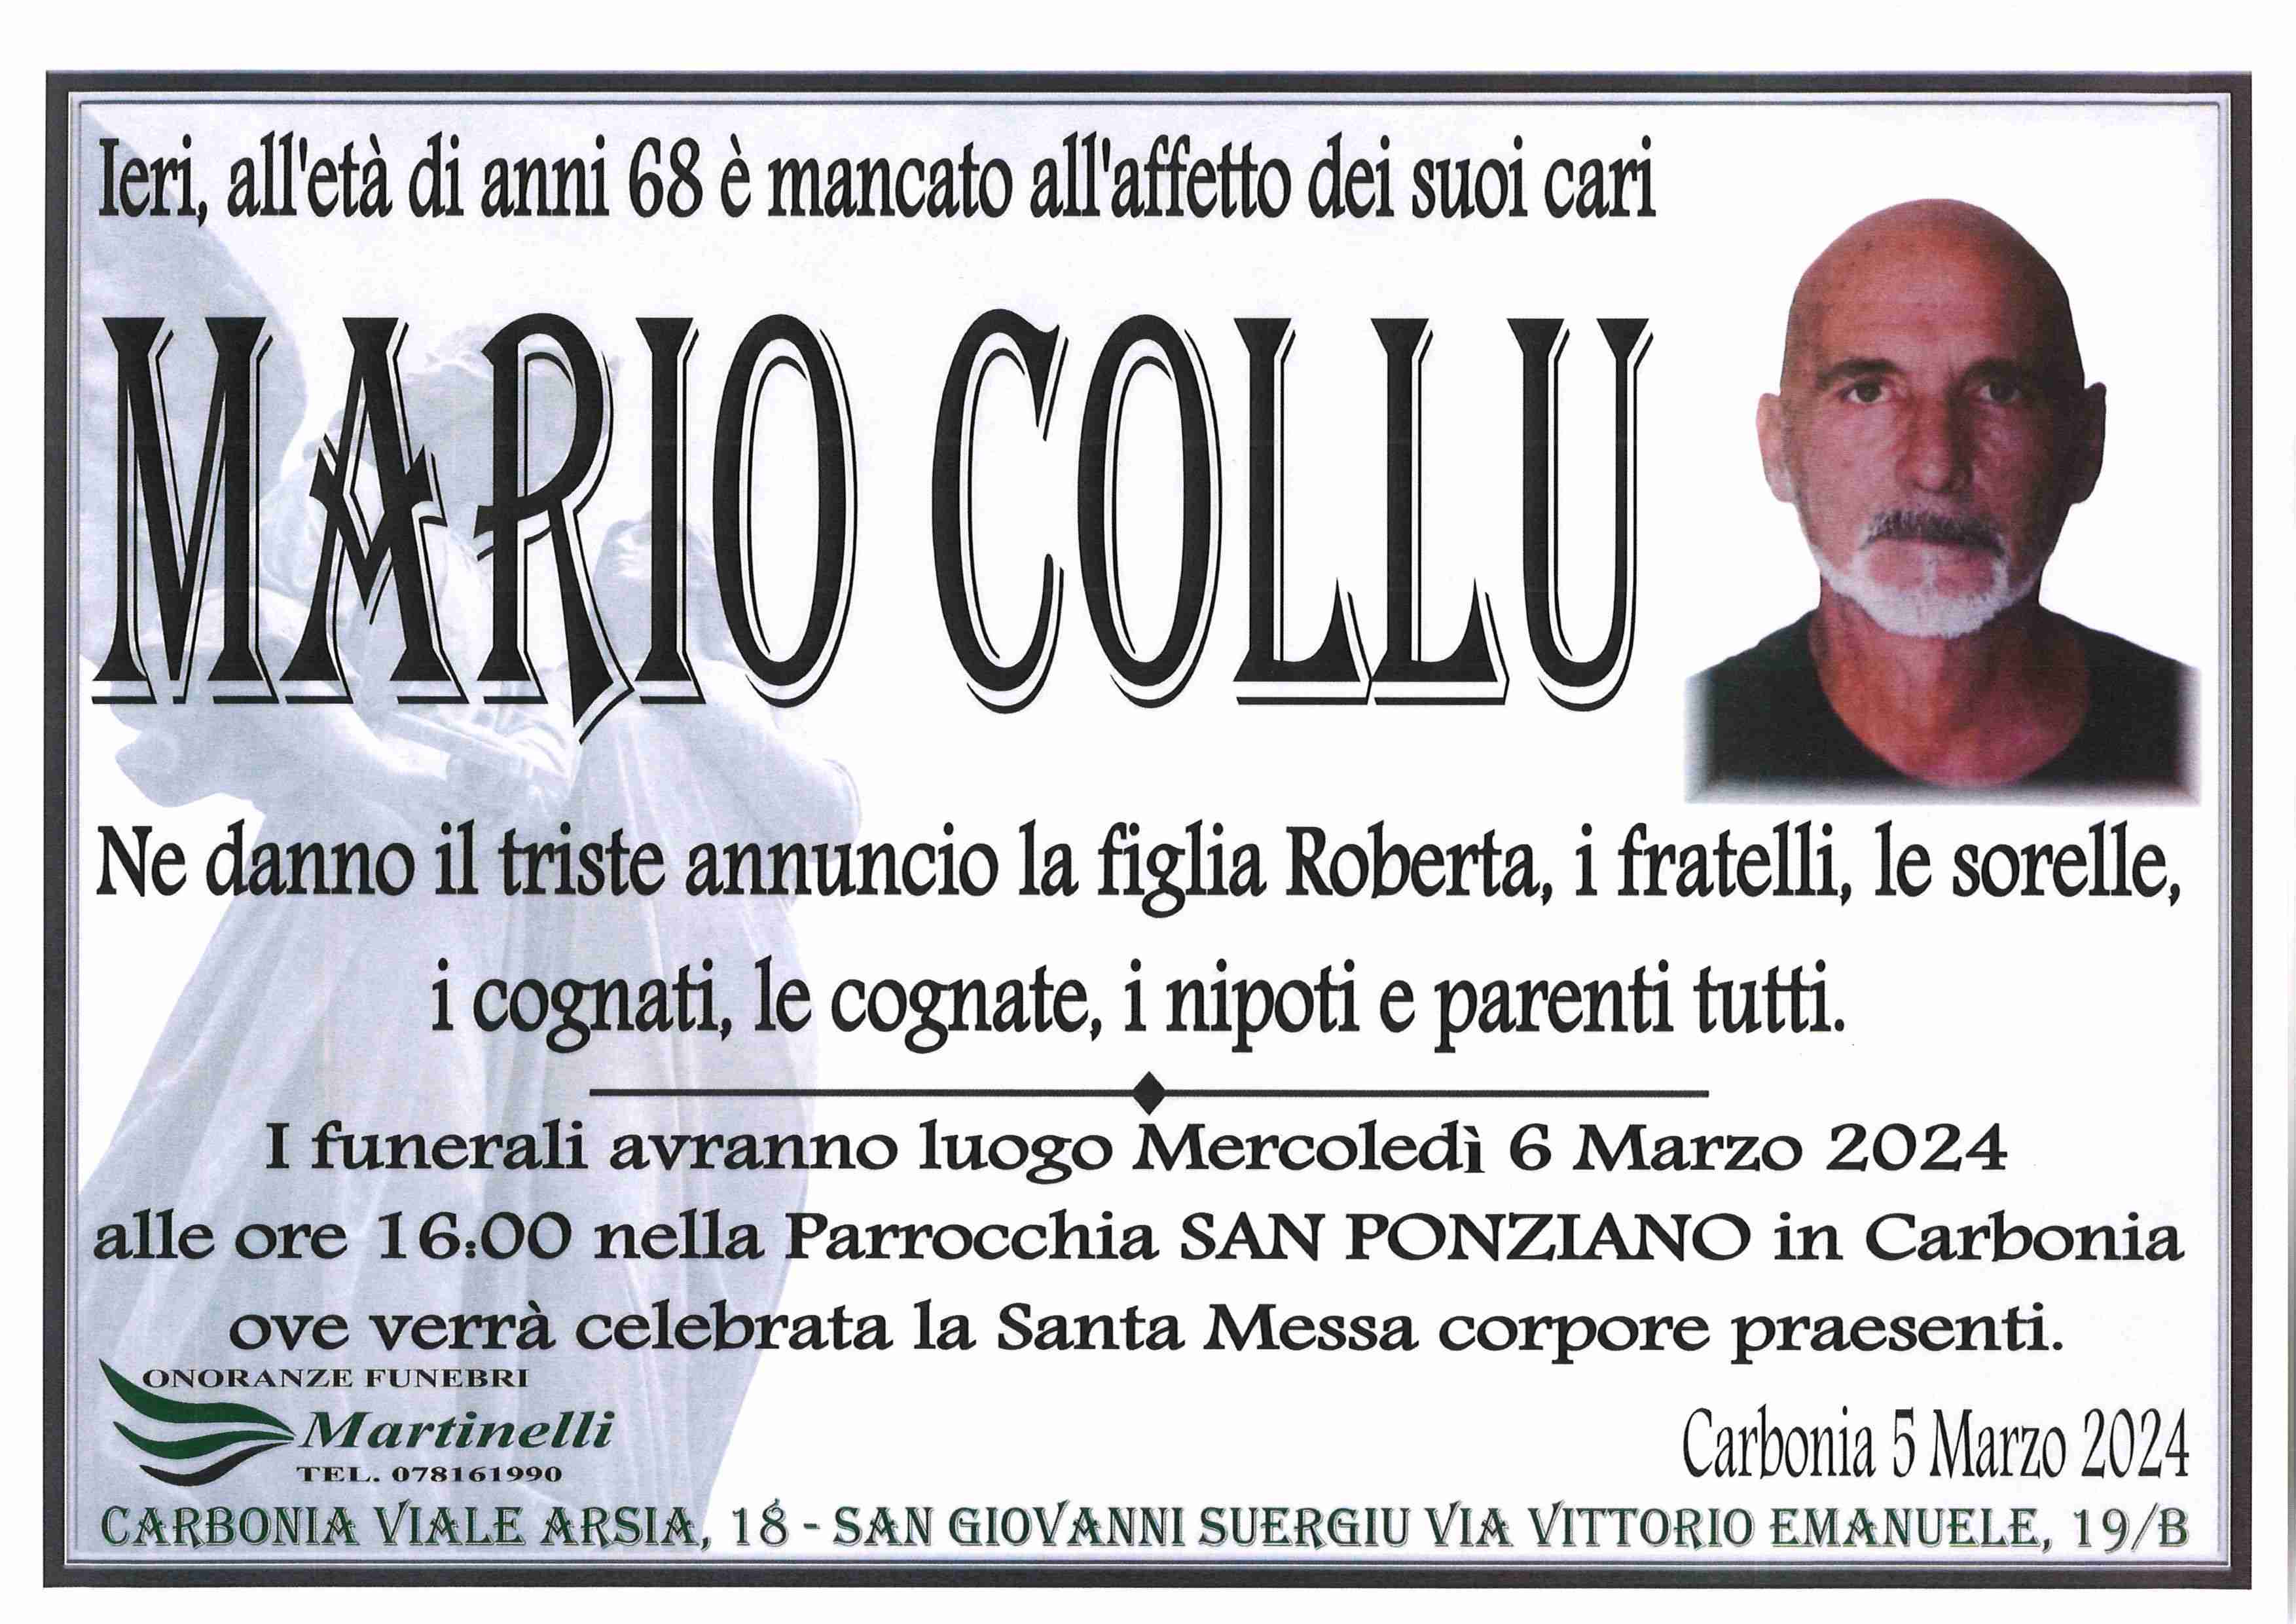 Mario Collu